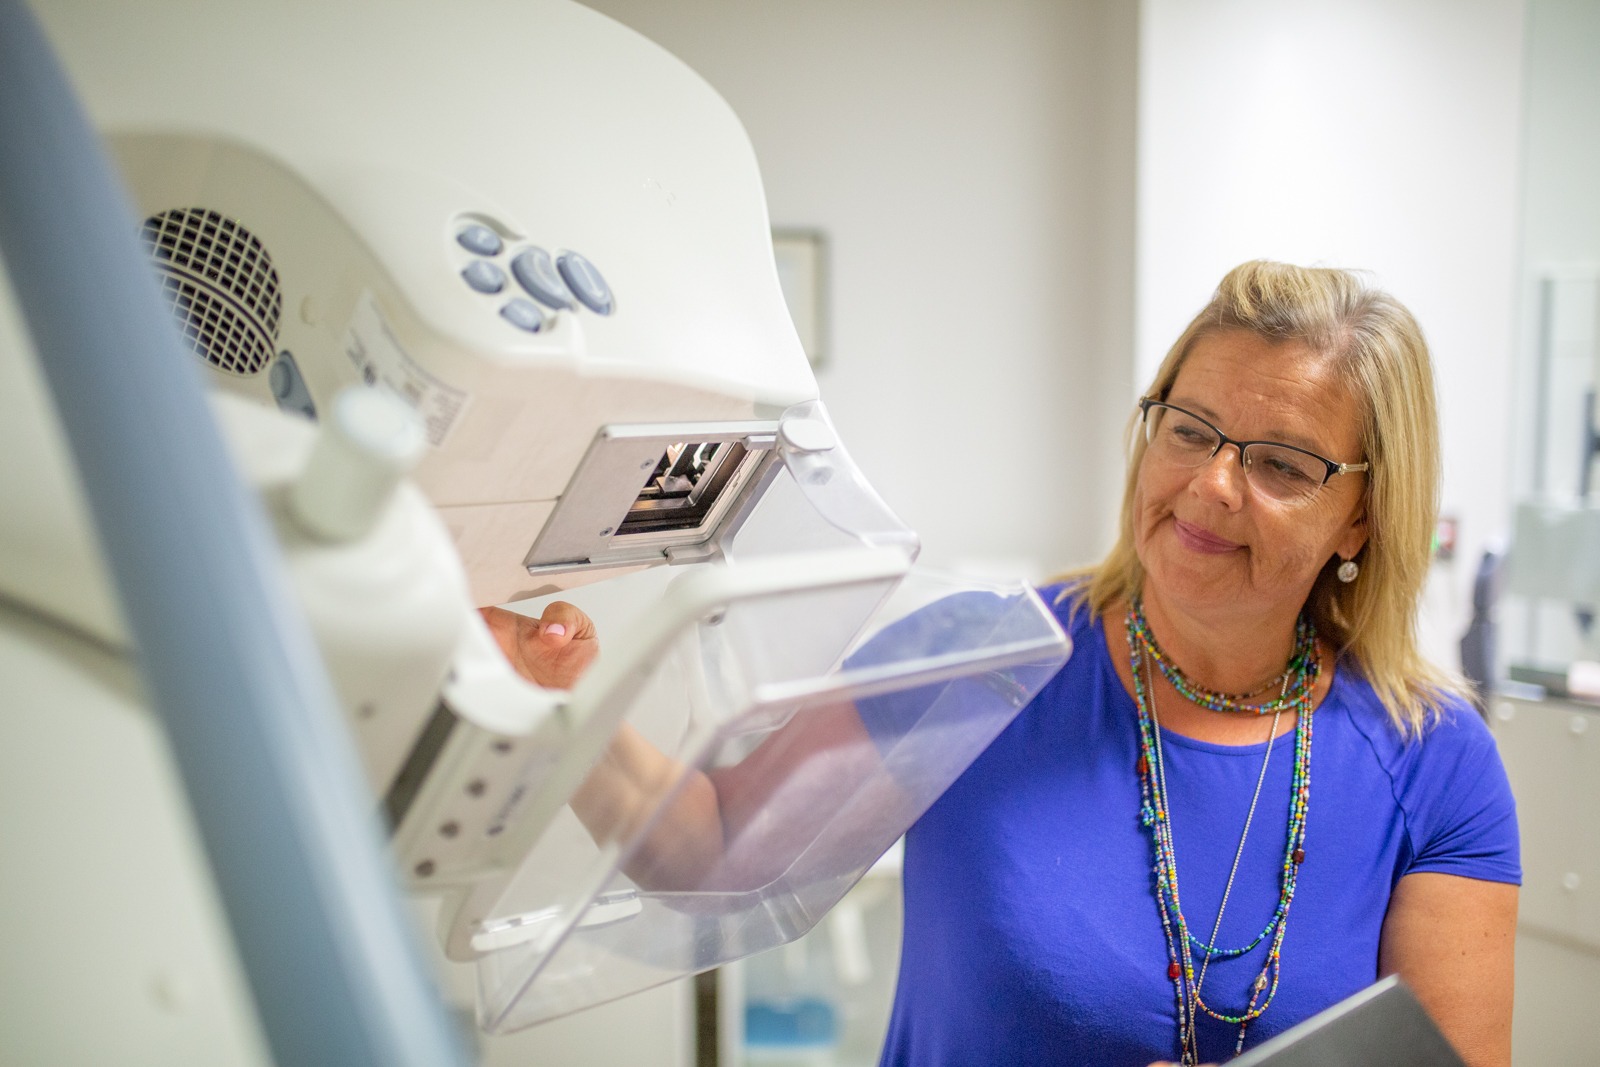 mammogram technologist demonstrates how mammogram works